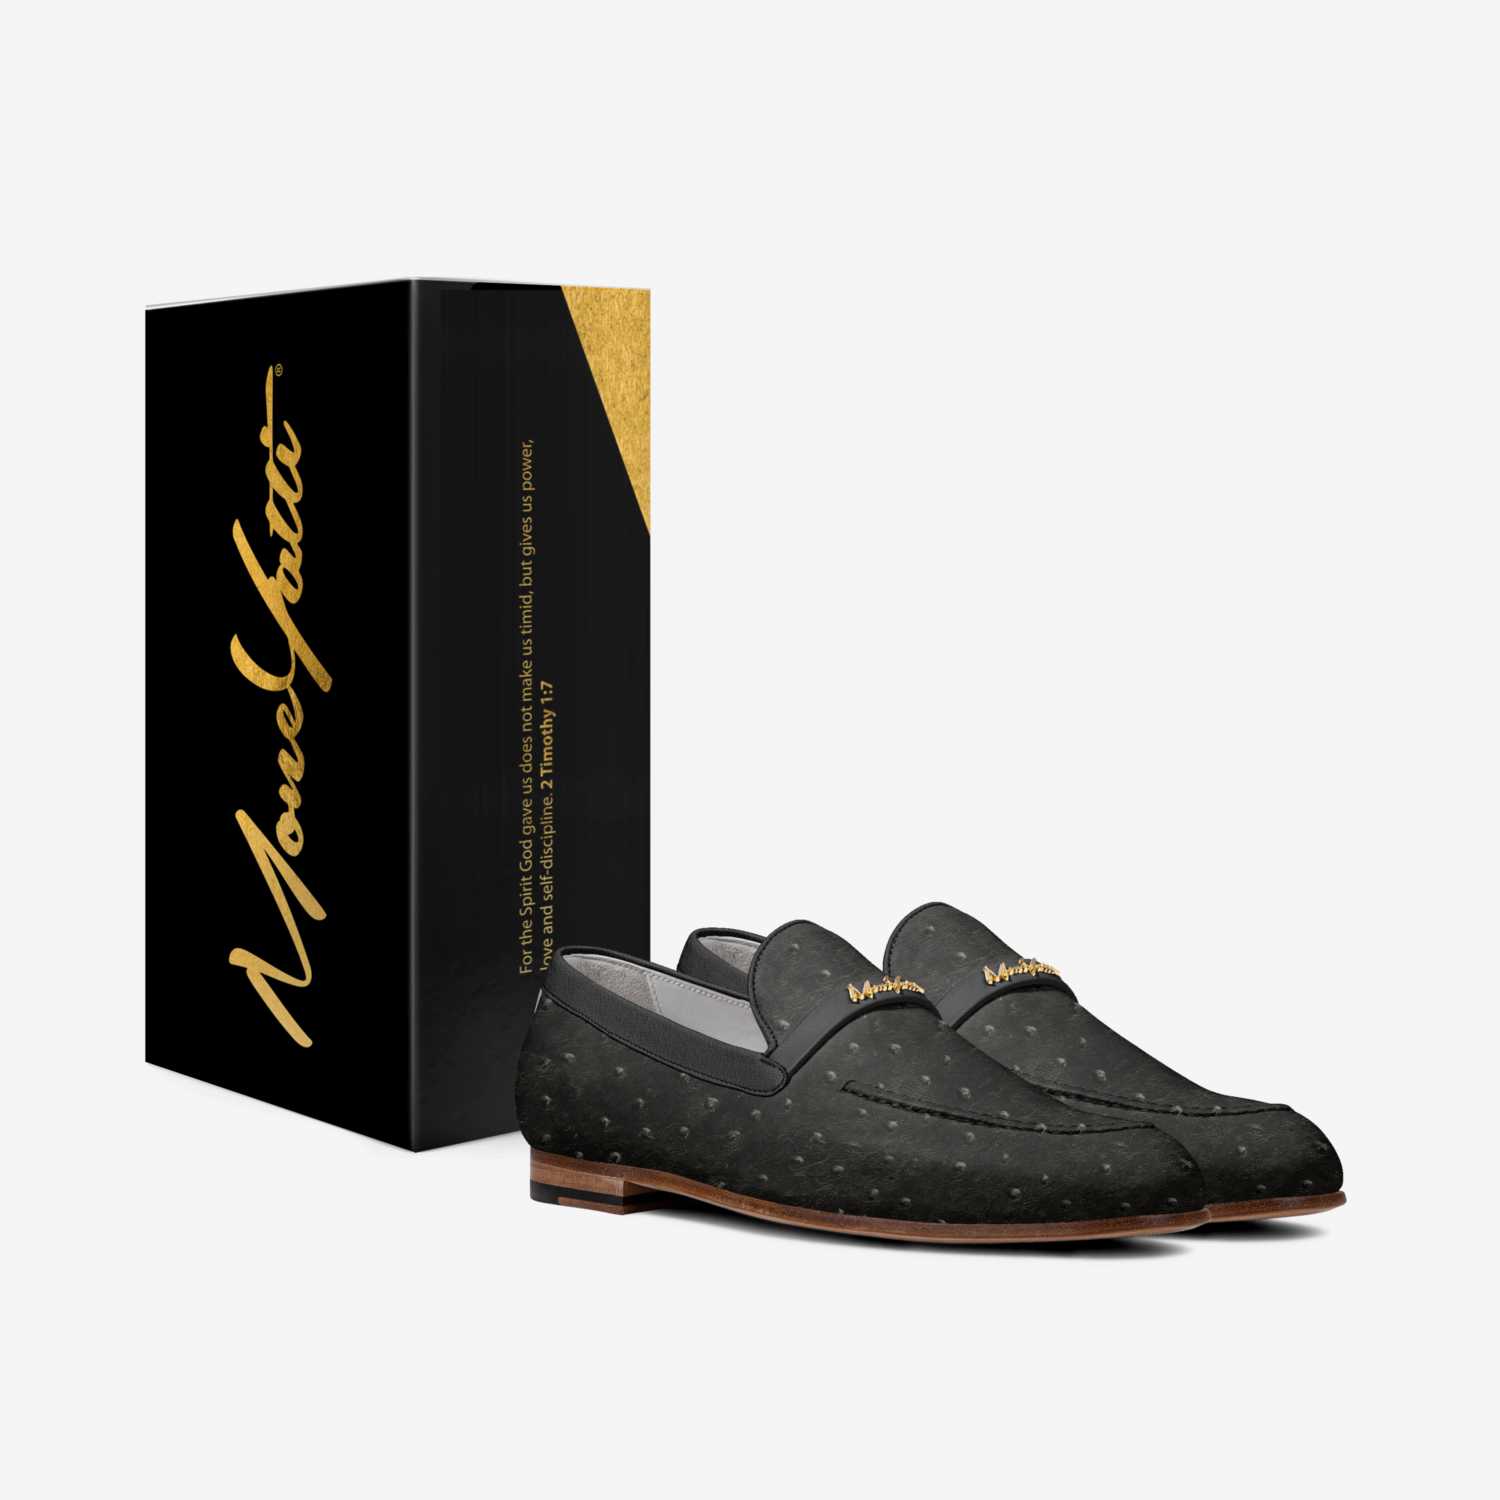  ELEGANTDRIP 006 custom made in Italy shoes by Moneyatti Brand | Box view